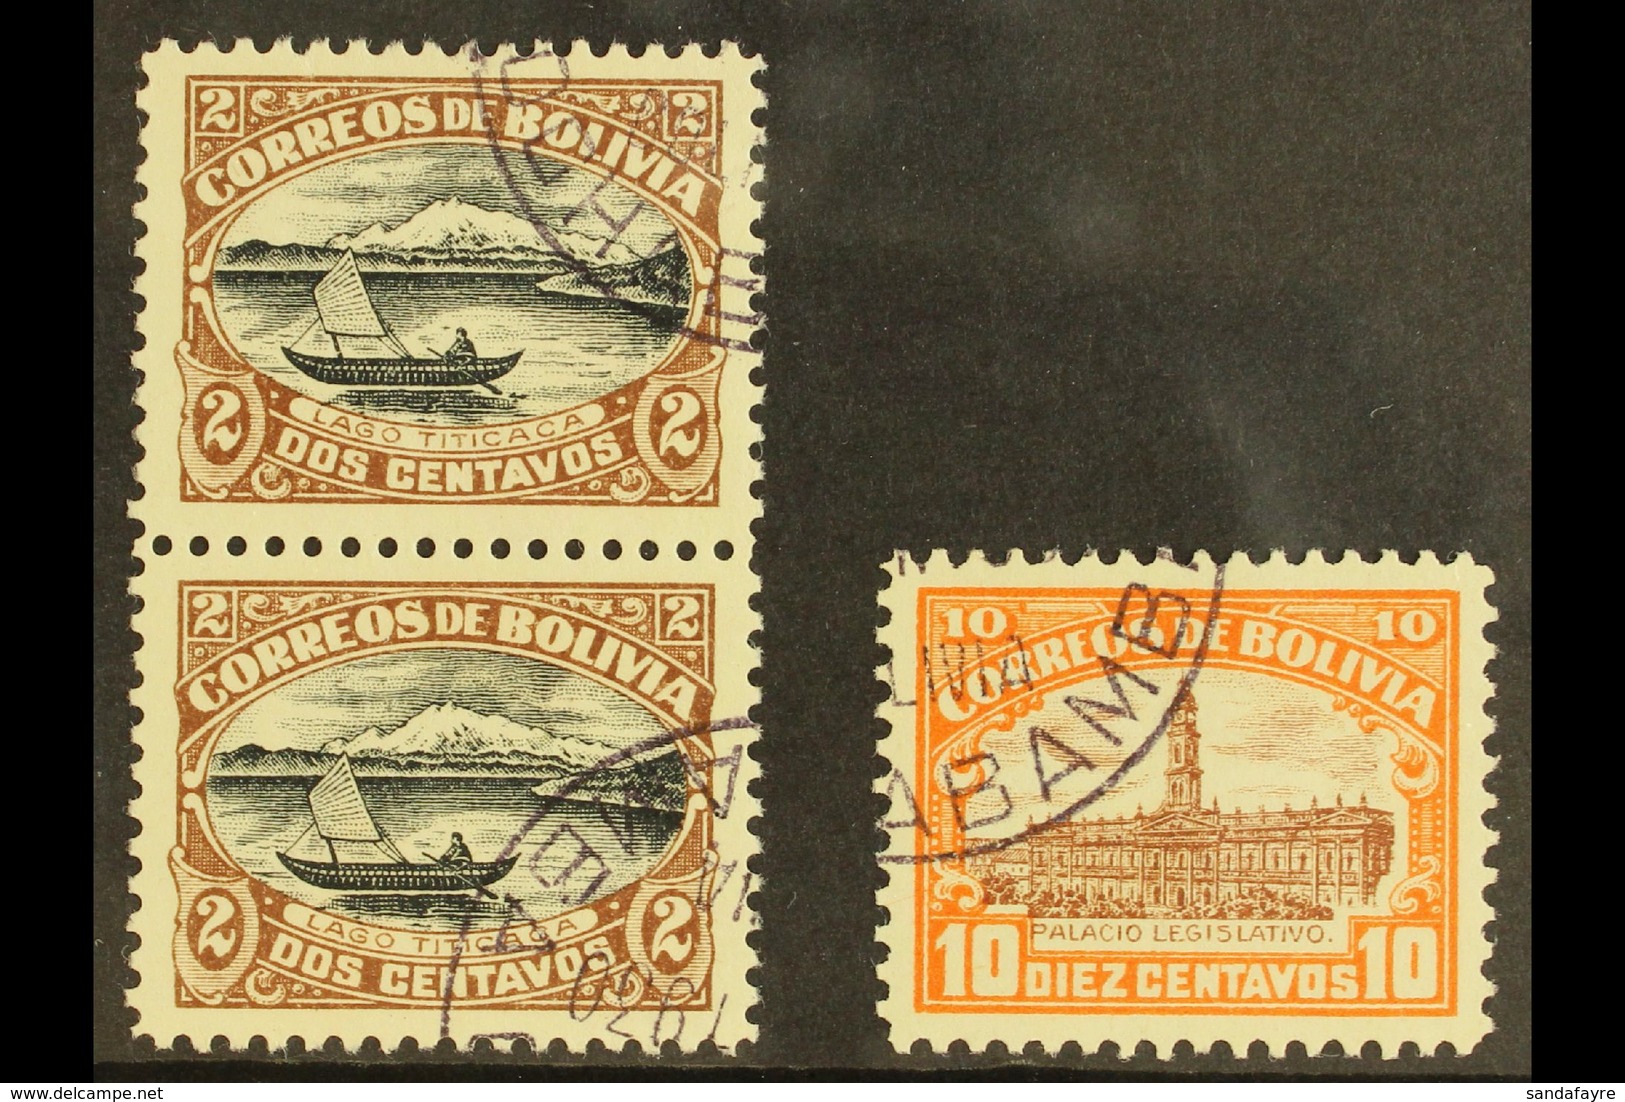 1916-17 PERFORATED COLOUR PROOFS. 2c Brown & Black Lake Titicaca Vertical Pair (Scott 113) And 10c Brown & Orange Parlia - Bolivia